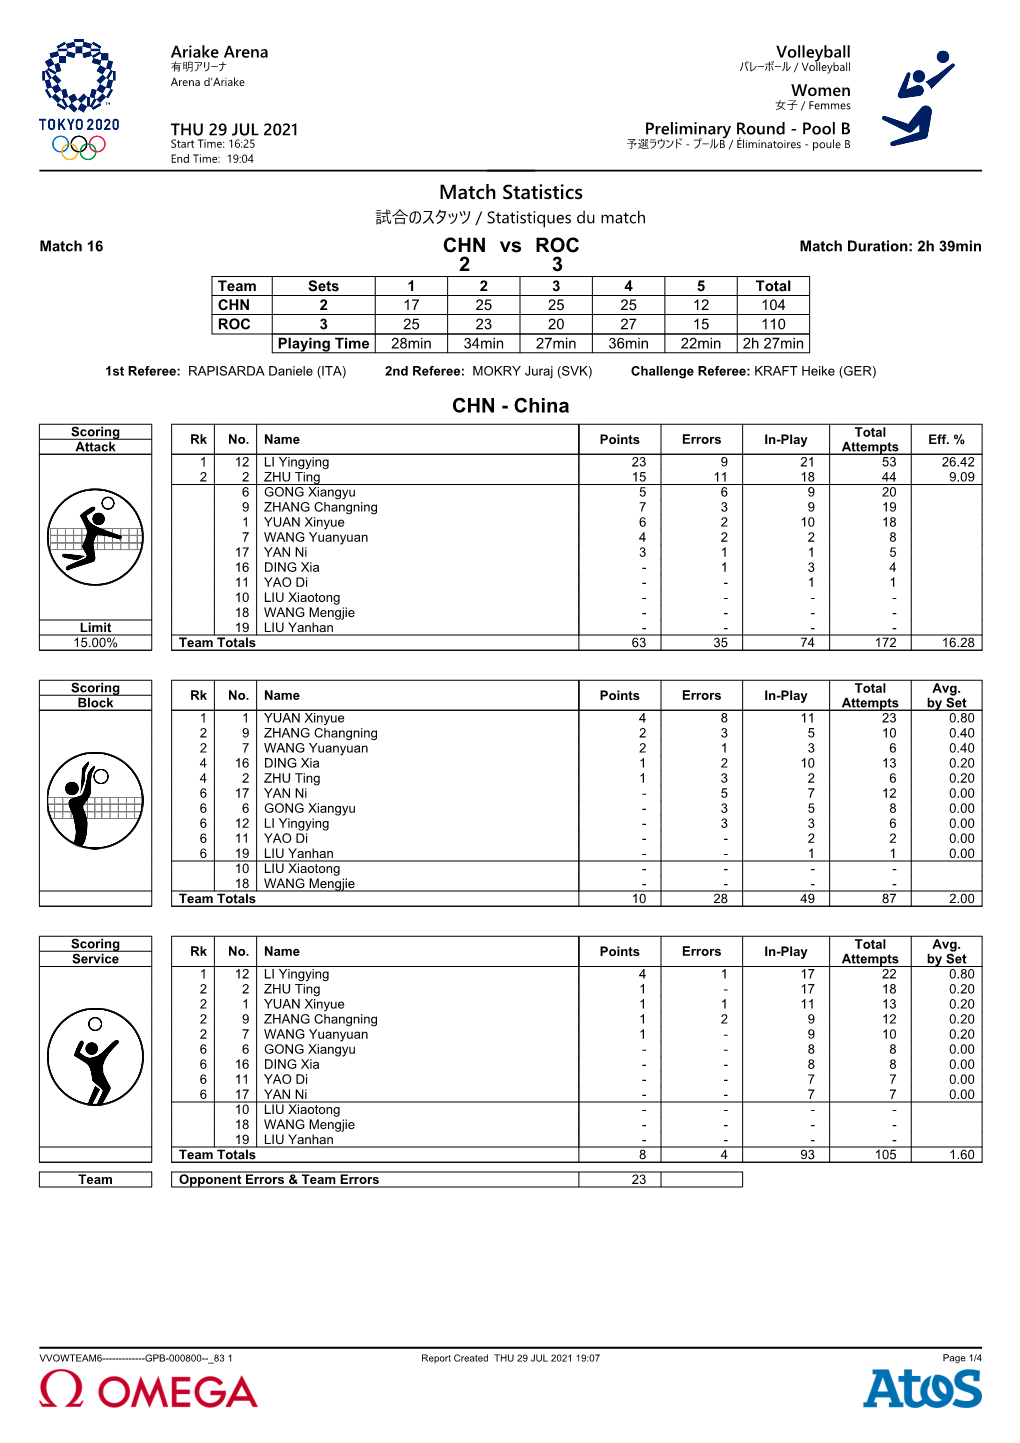 Match Statistics CHN Vs ROC 2 3